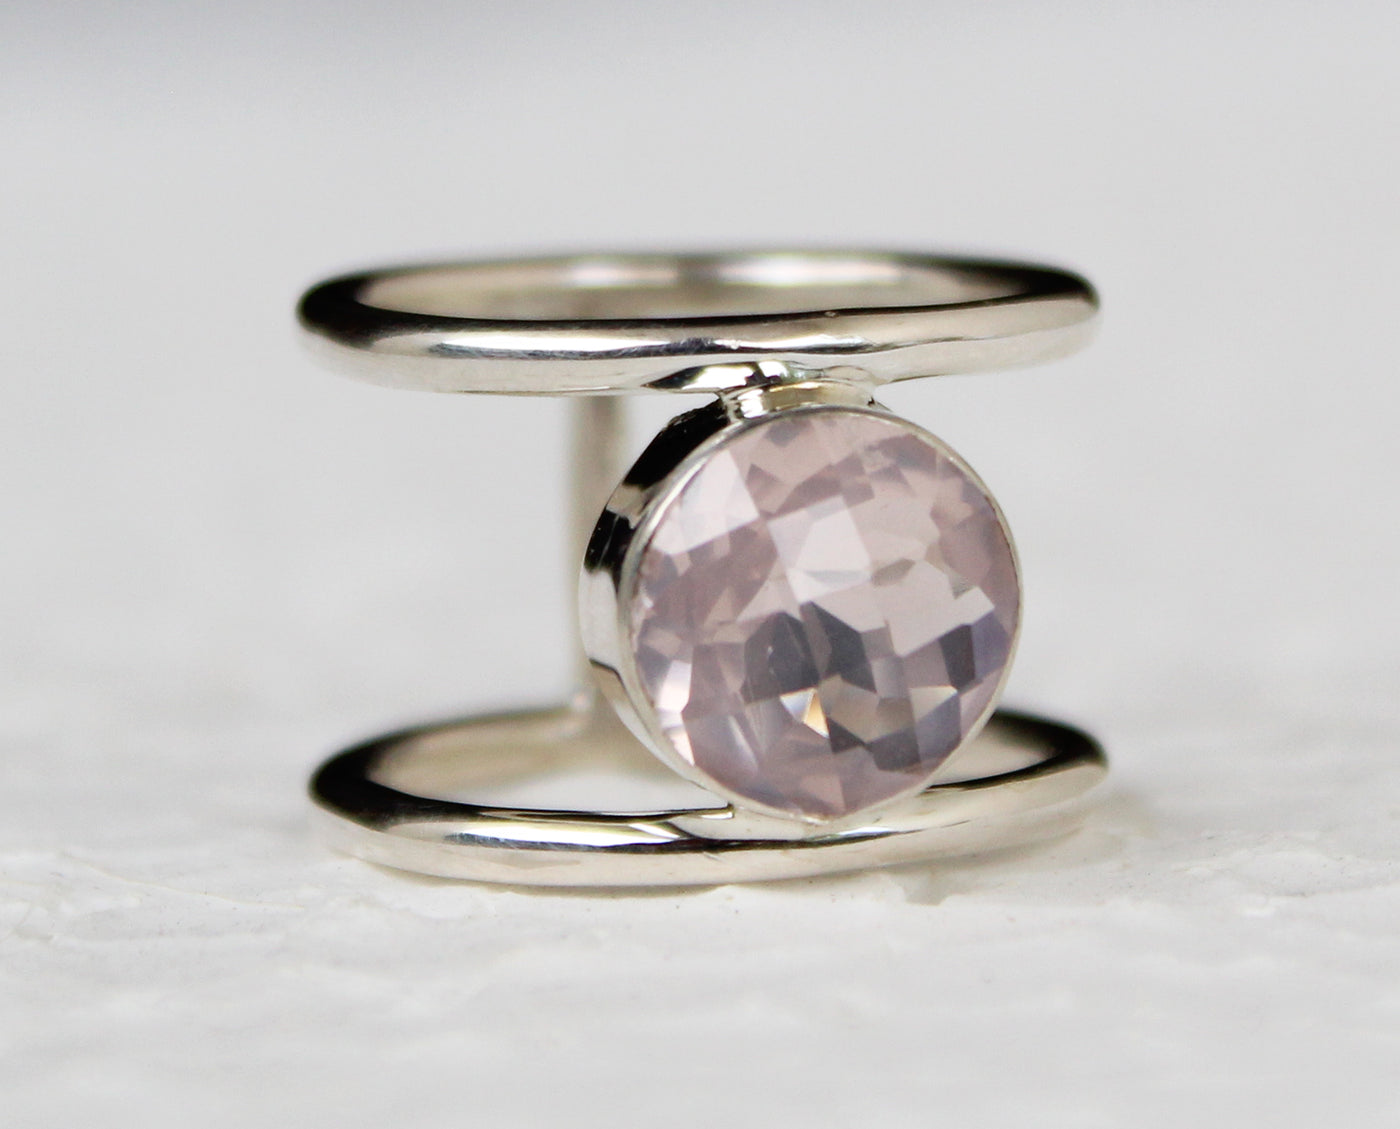 Rose Quartz silver Ring, Pink Quartz Ring, Split Band, Sterling Silver Ring, Bohemian, Handmade Ring, Round Gemstone Ring, Pink Stone Ring